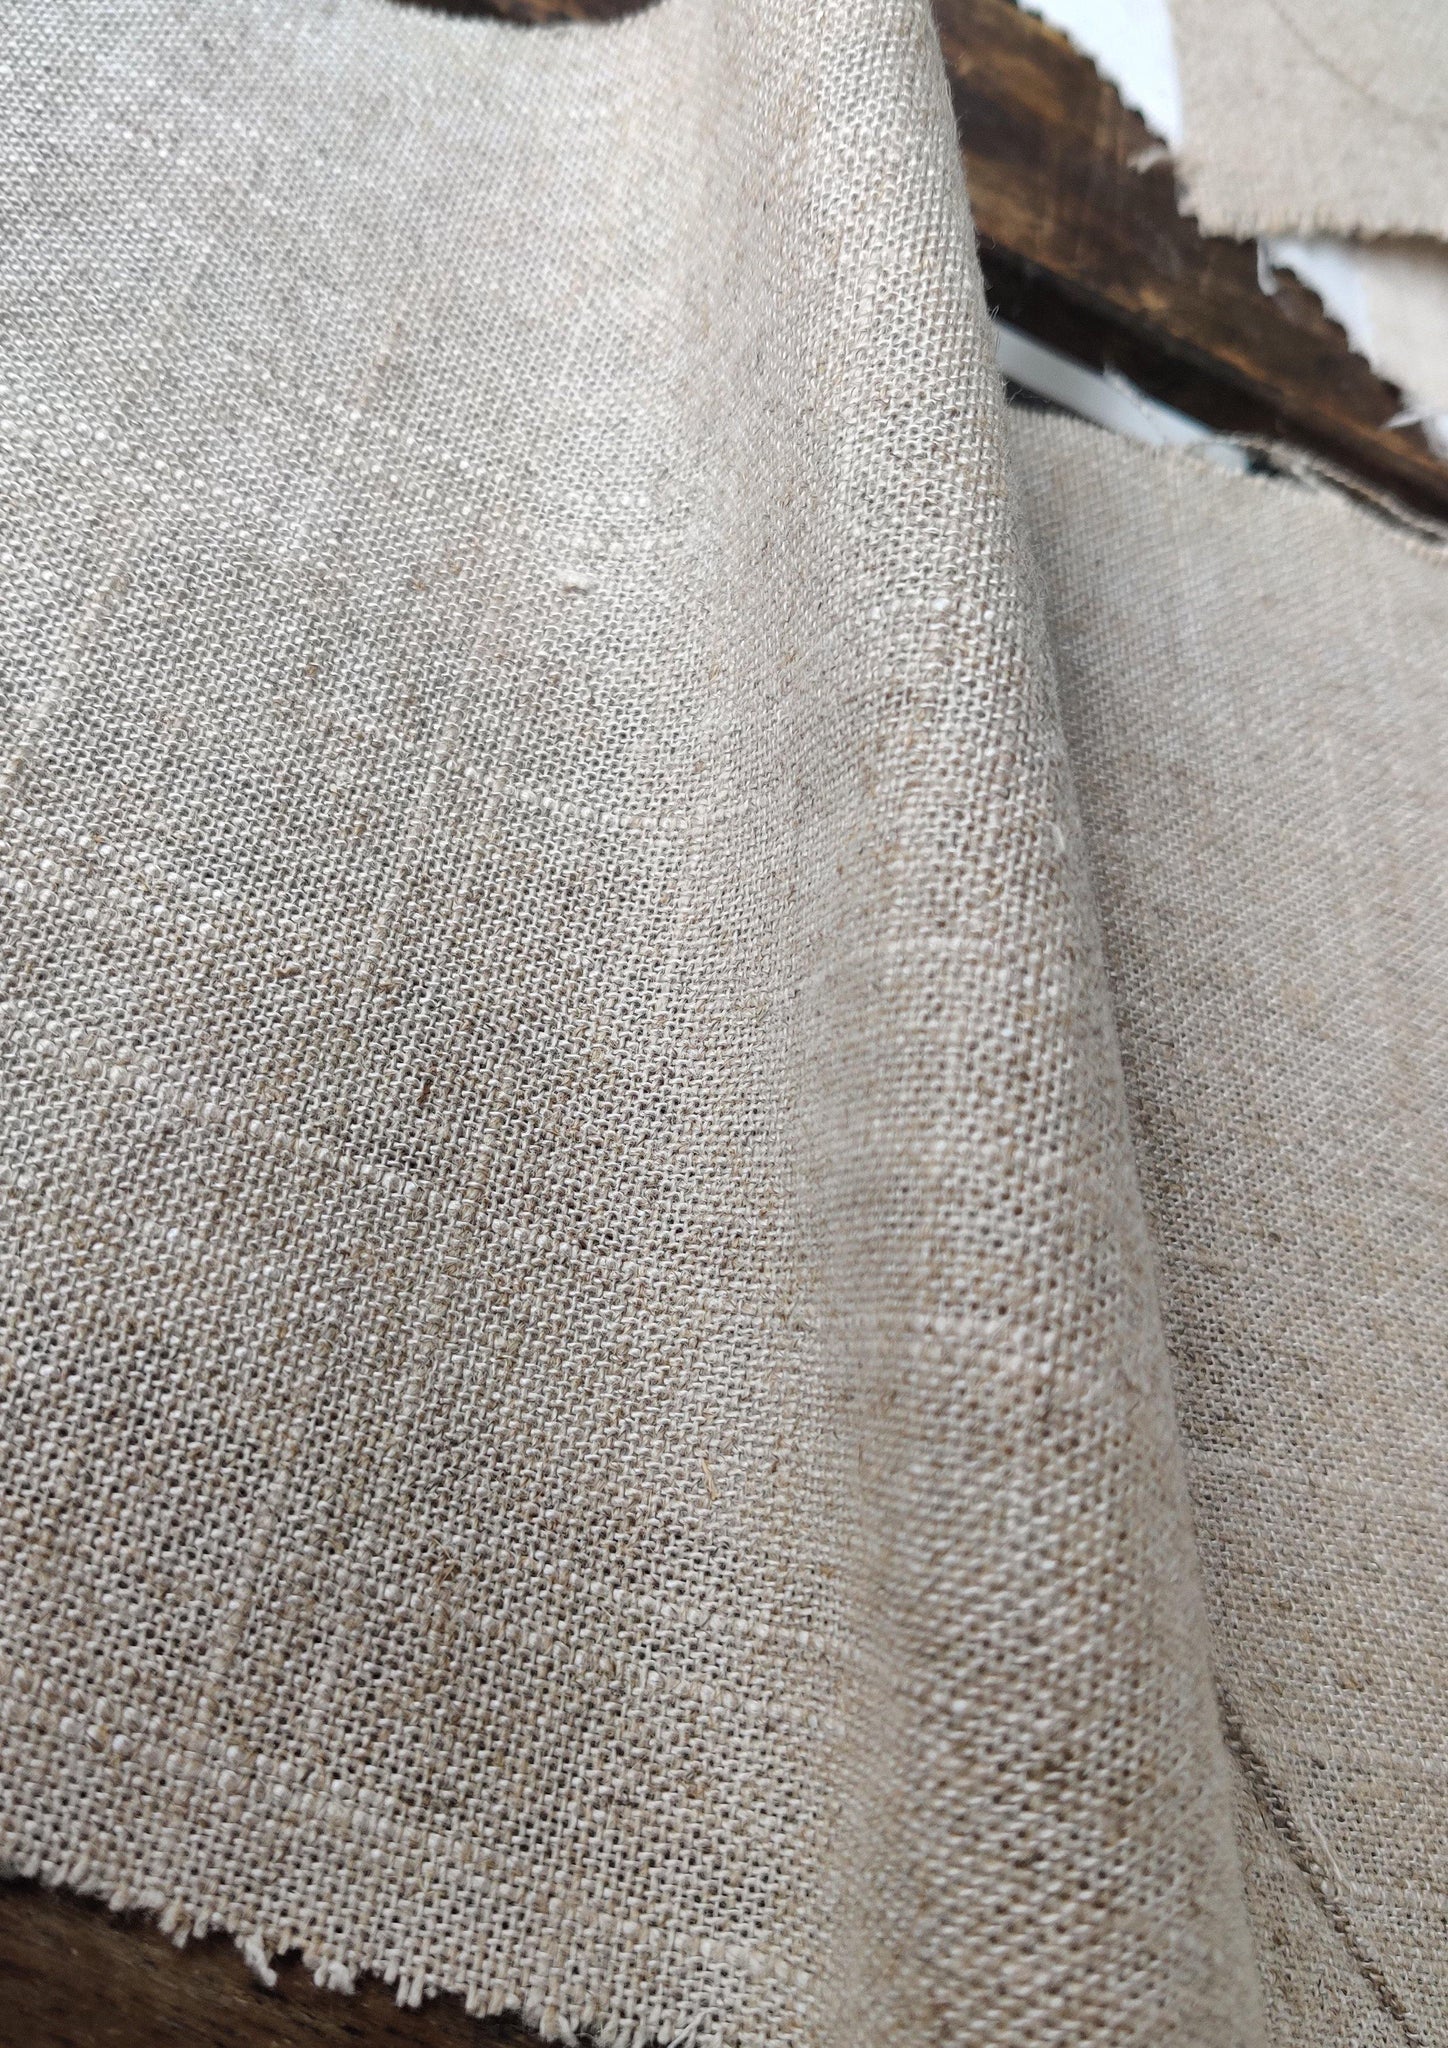 Hemp, Cotton - Blended Woven Fabric - Hemp Republic